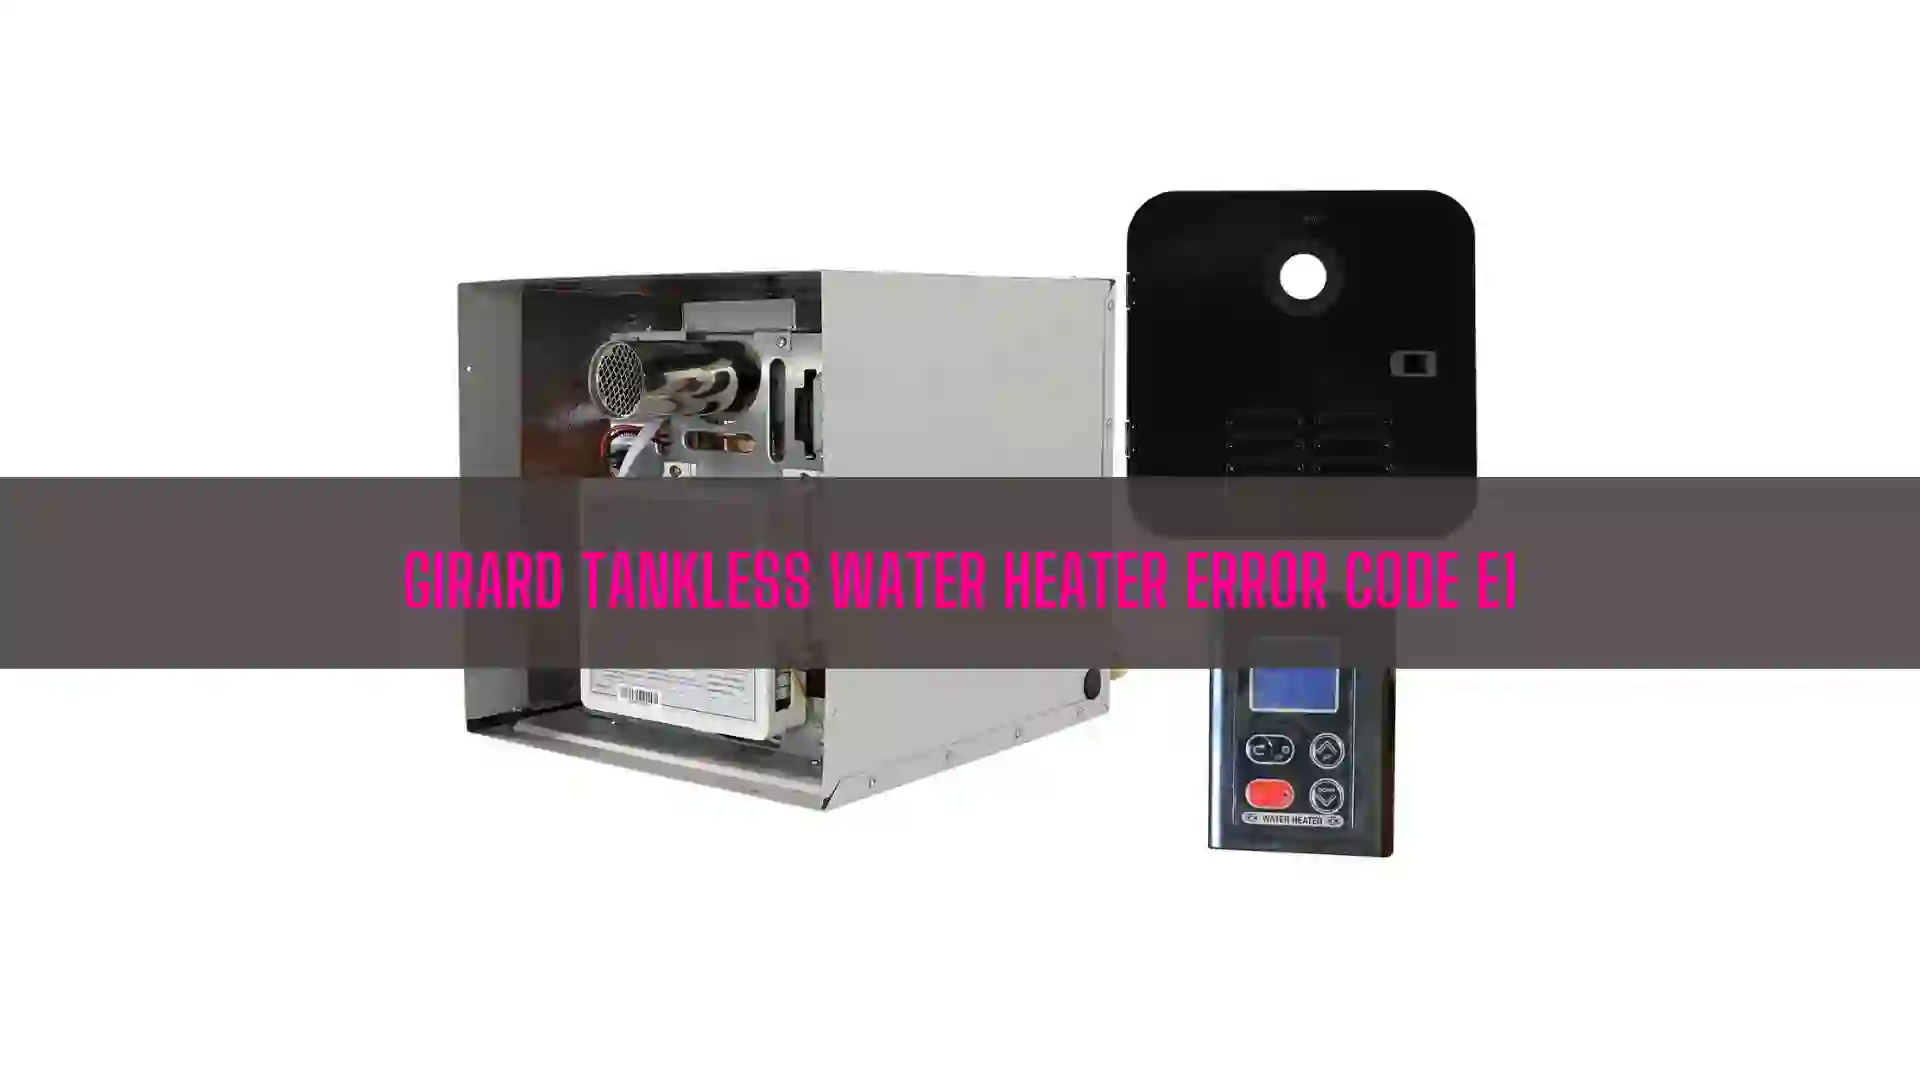 Girard Tankless Water Heater Error Code E1